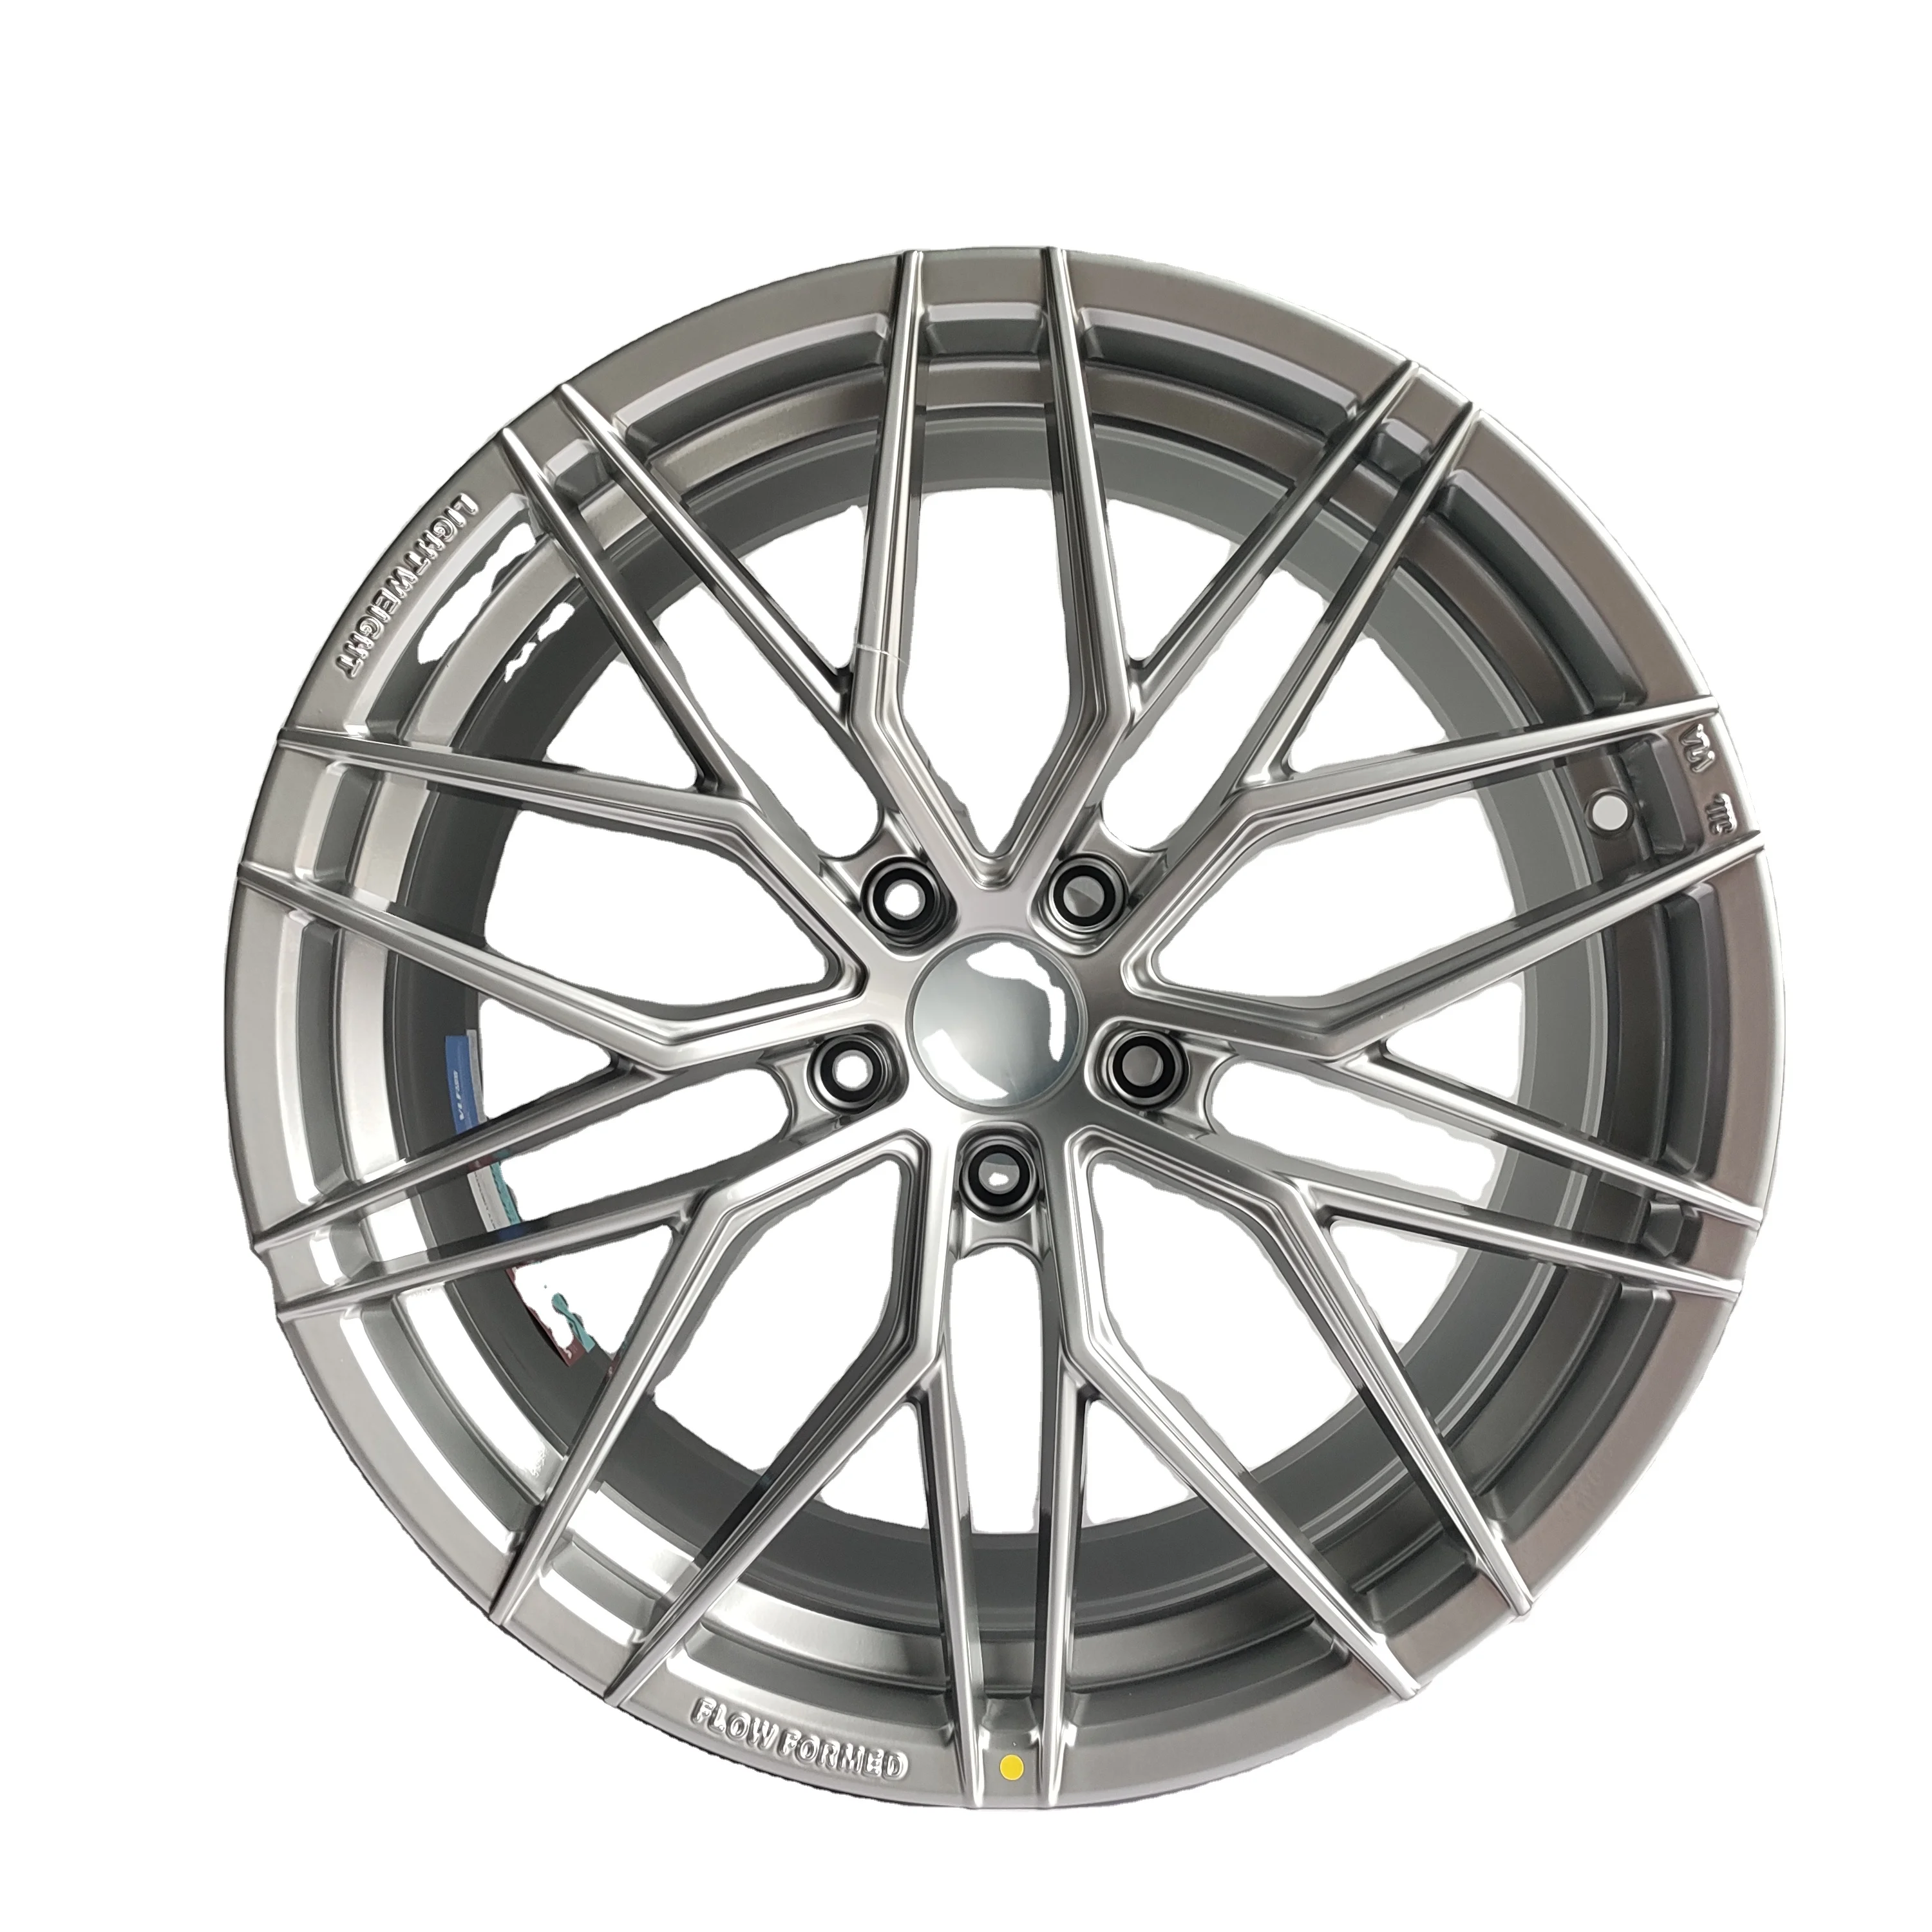 

2022 NEW Design 18 19 inch wheels 5x114.3 5x112 5x120 ets30 8J 9J mesh design cheap casting alloy car wheel rims for JDM